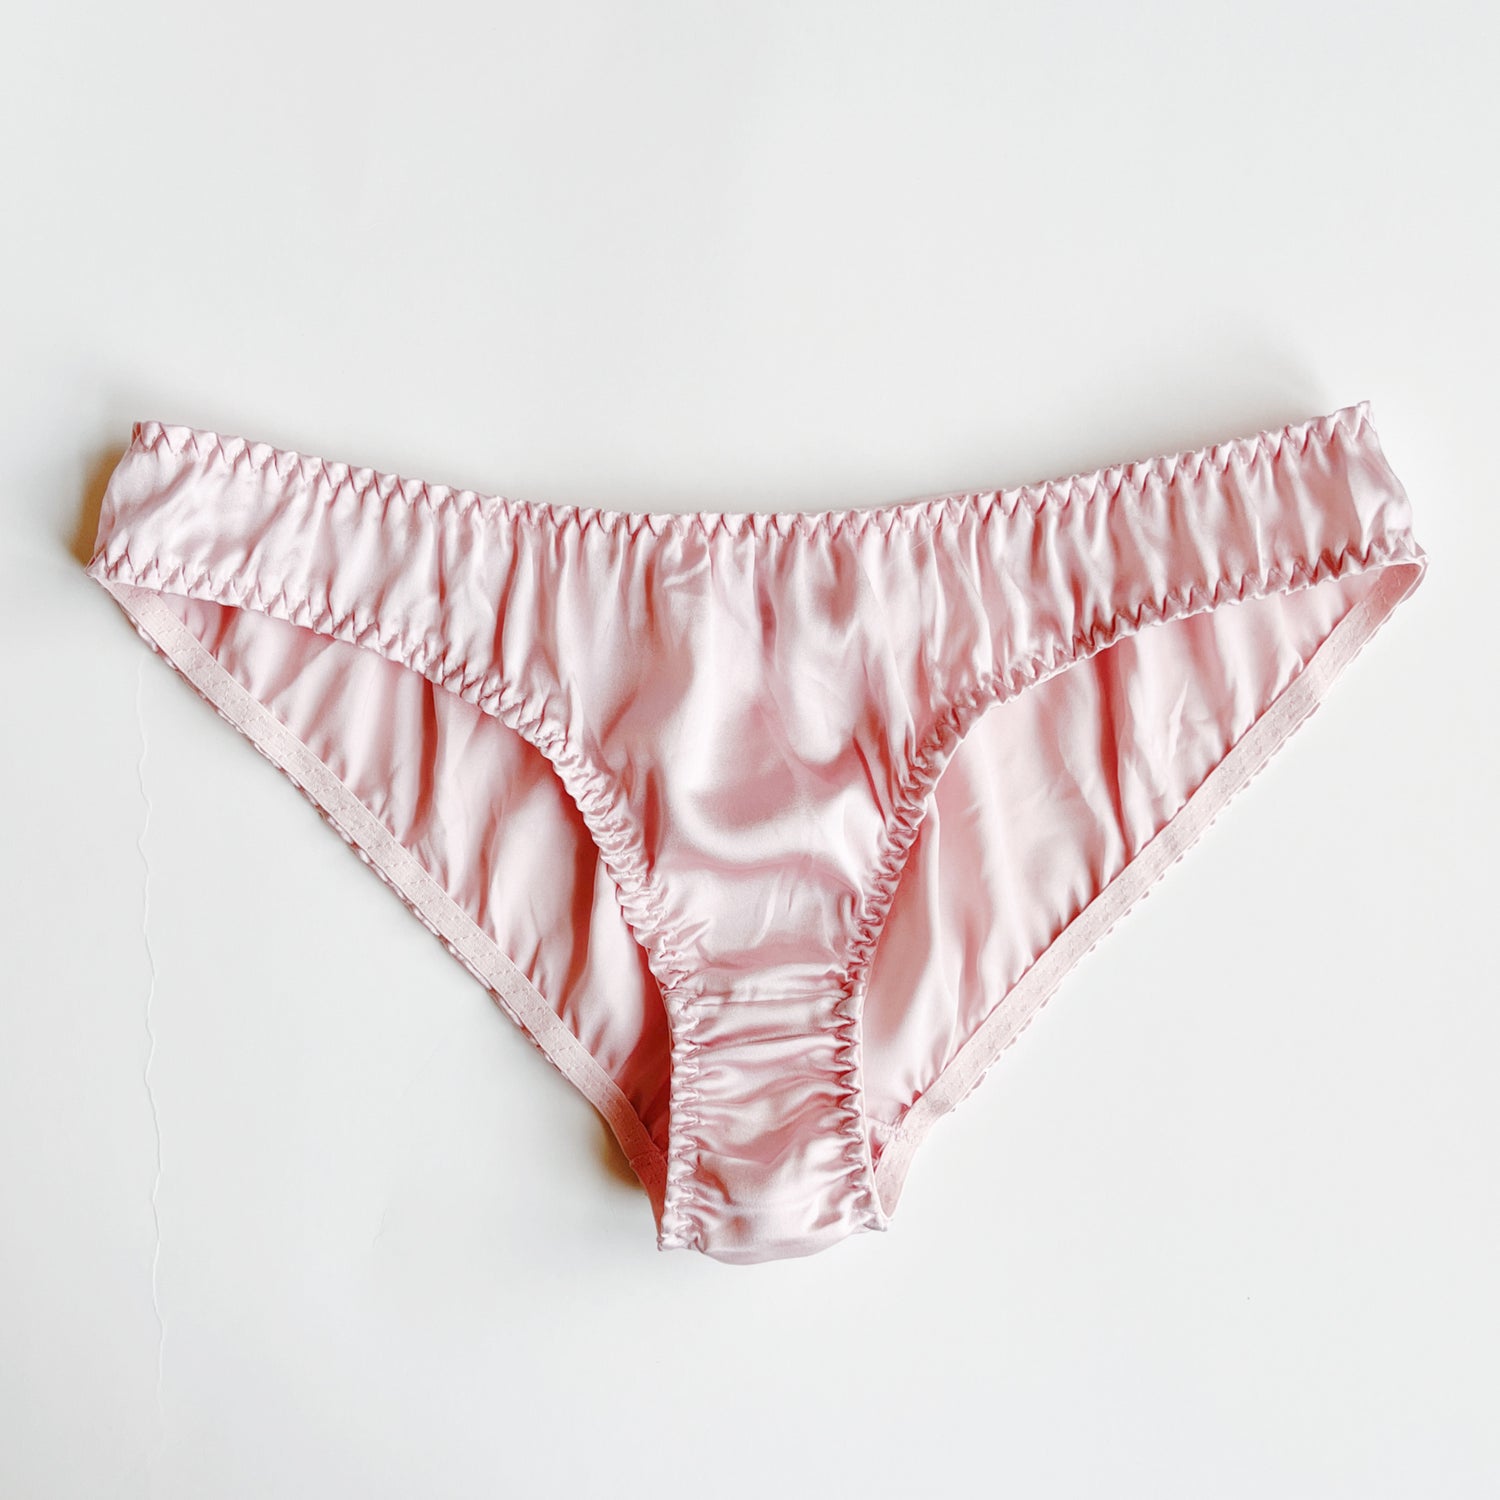 Women's Mulberry Silk Panties Sexy Sheer Bikini Satin Briefs